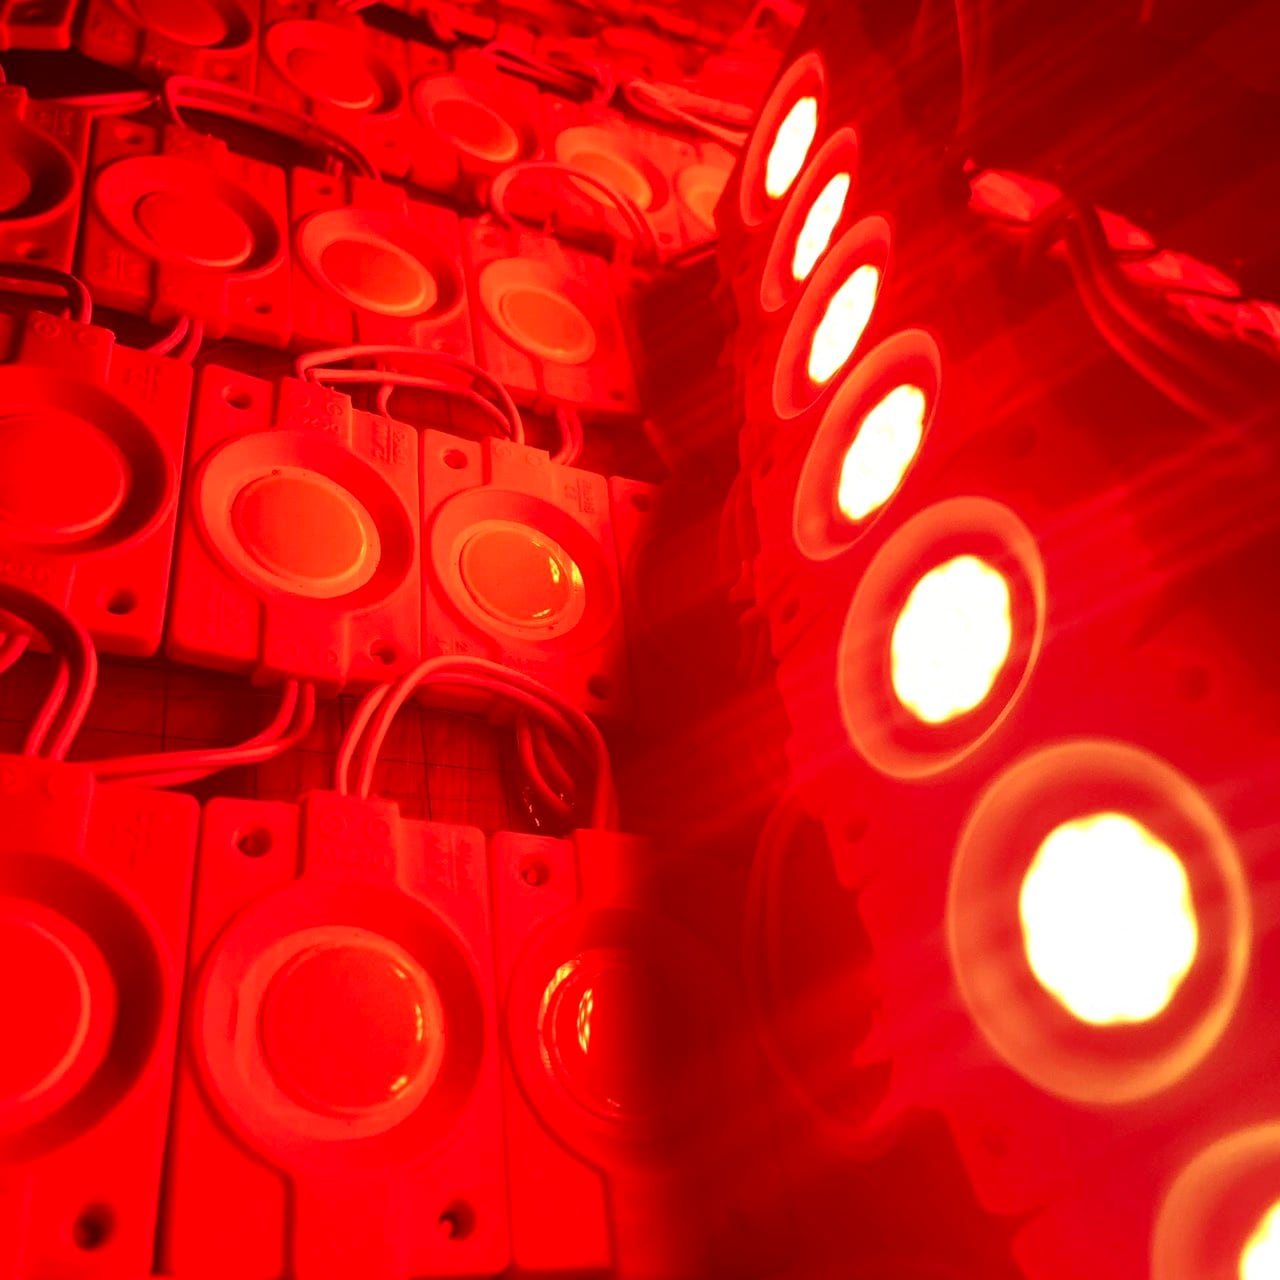 24V トラック用品 増設ランプ LED マーカー タイヤ灯 作業灯 路肩灯 架装部品 レッド 赤 AmeCanJapan